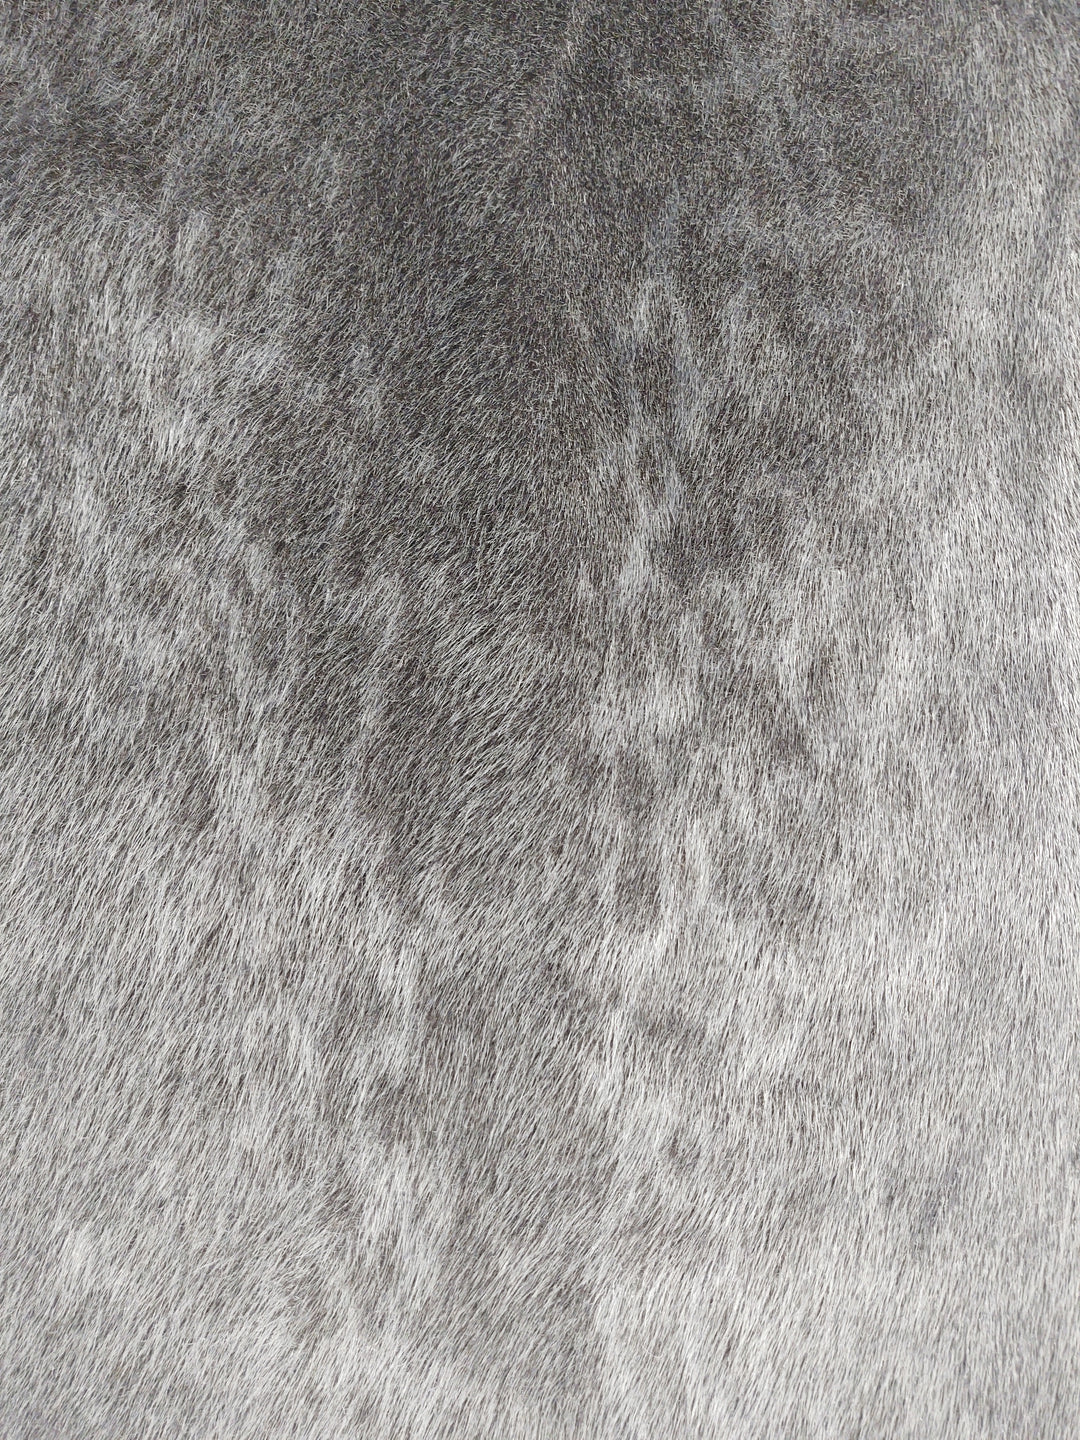 Ringed Seal (Ringsæl) DK Grey - Dressed Fur Skin - Fur | STAMPE PELS